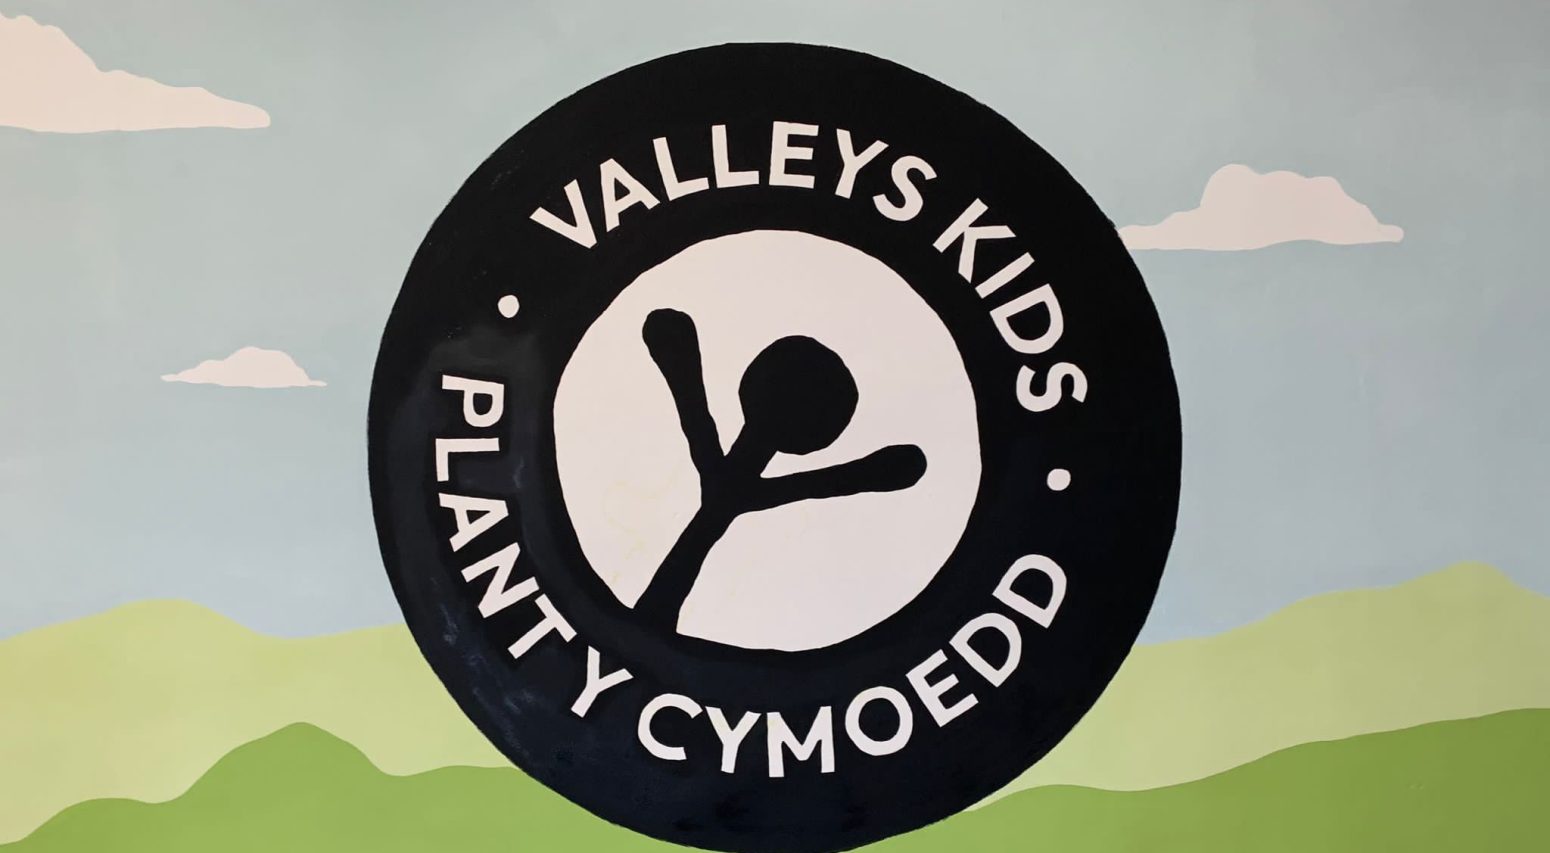 Valleys kids logo